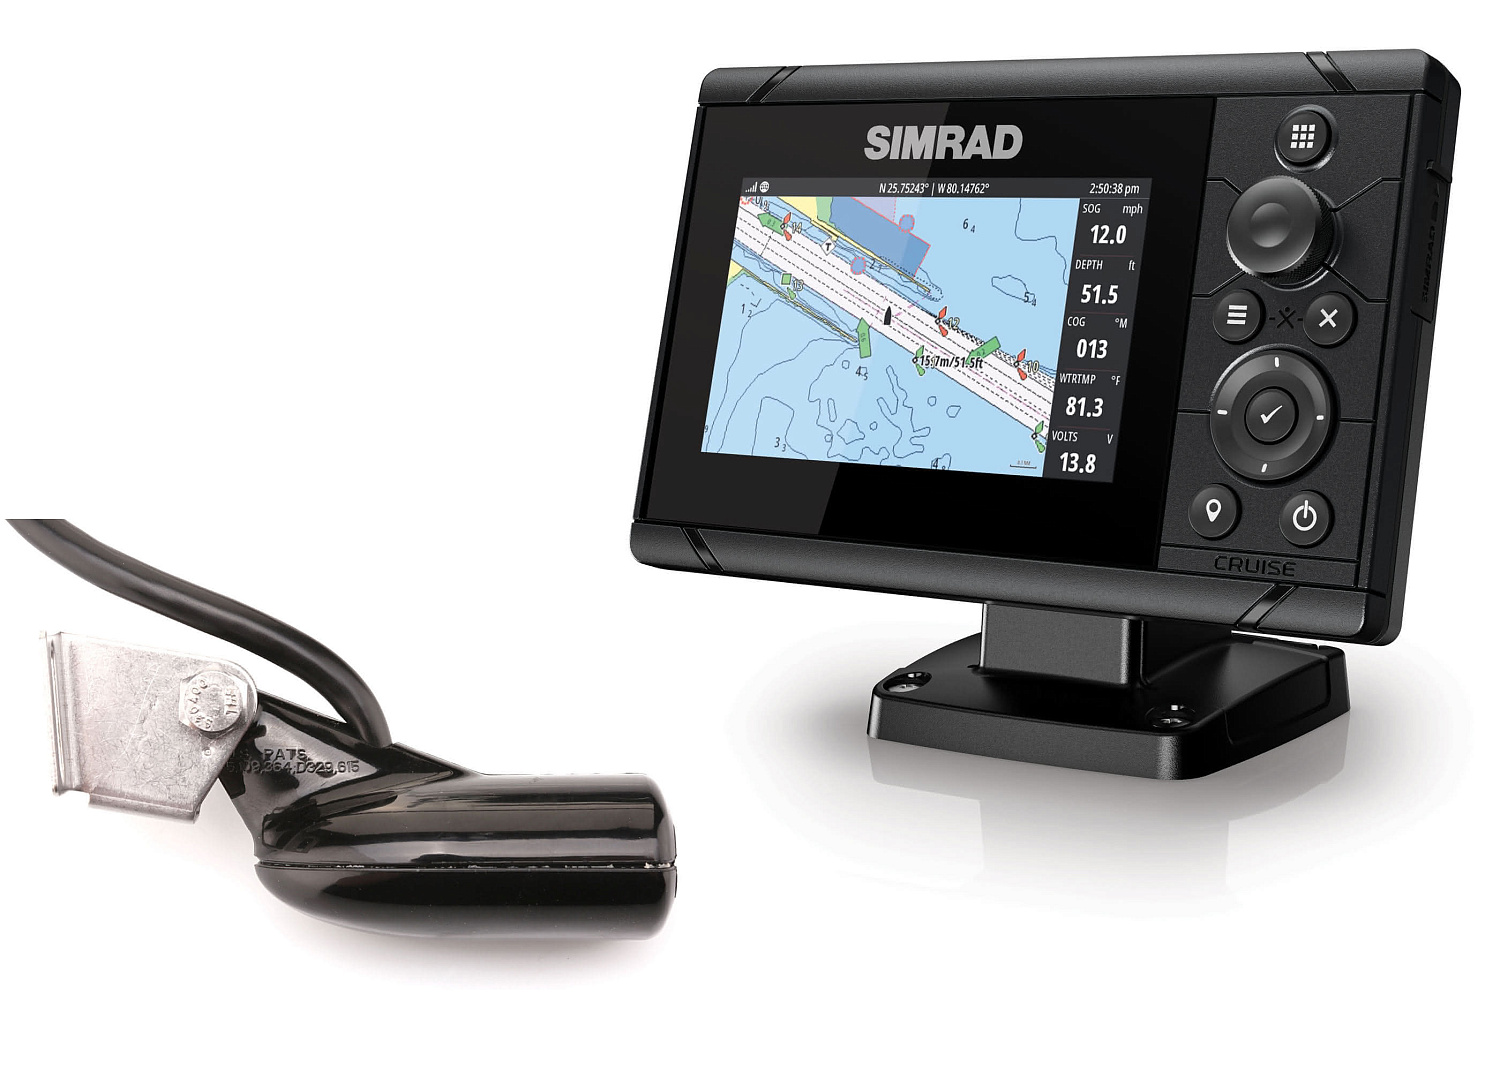 SIMRAD Cruise 5 с датчиком 83/200 kHz на транец